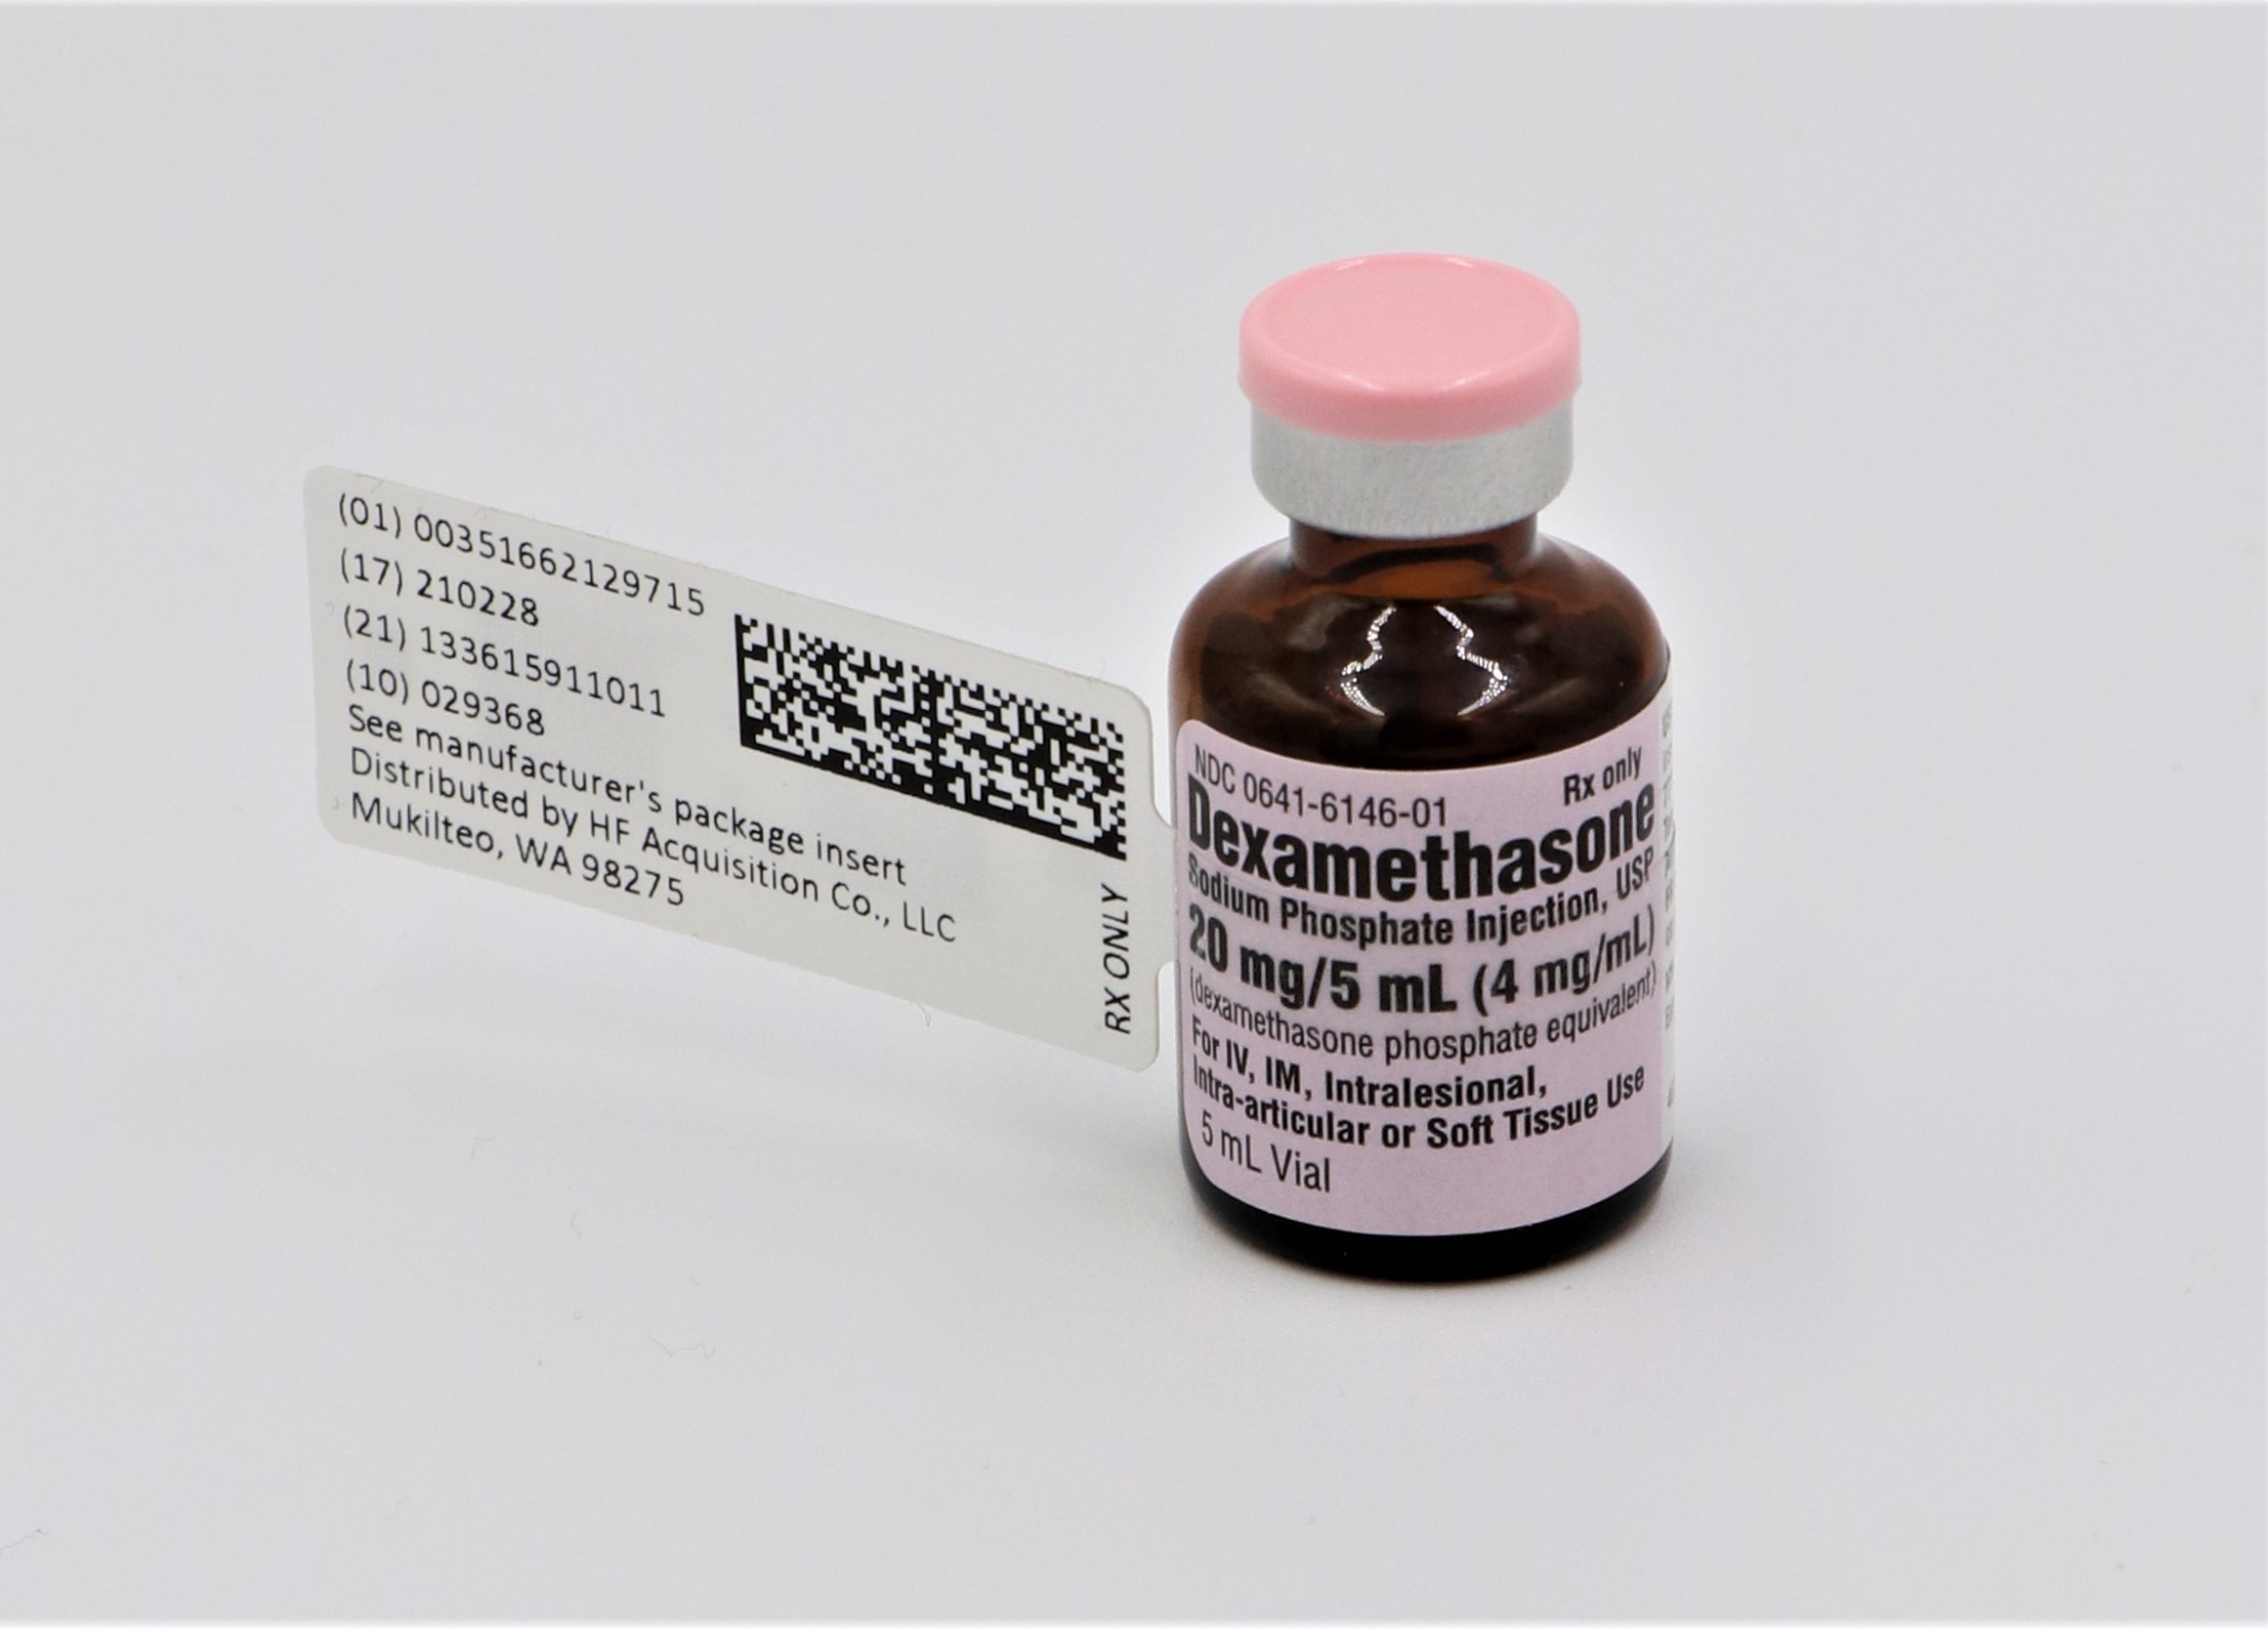 Is Dexamethasone Sodium Phosphate 5 Ml | Hf Acquisition Co Llc, Dba Healthfirst safe while breastfeeding